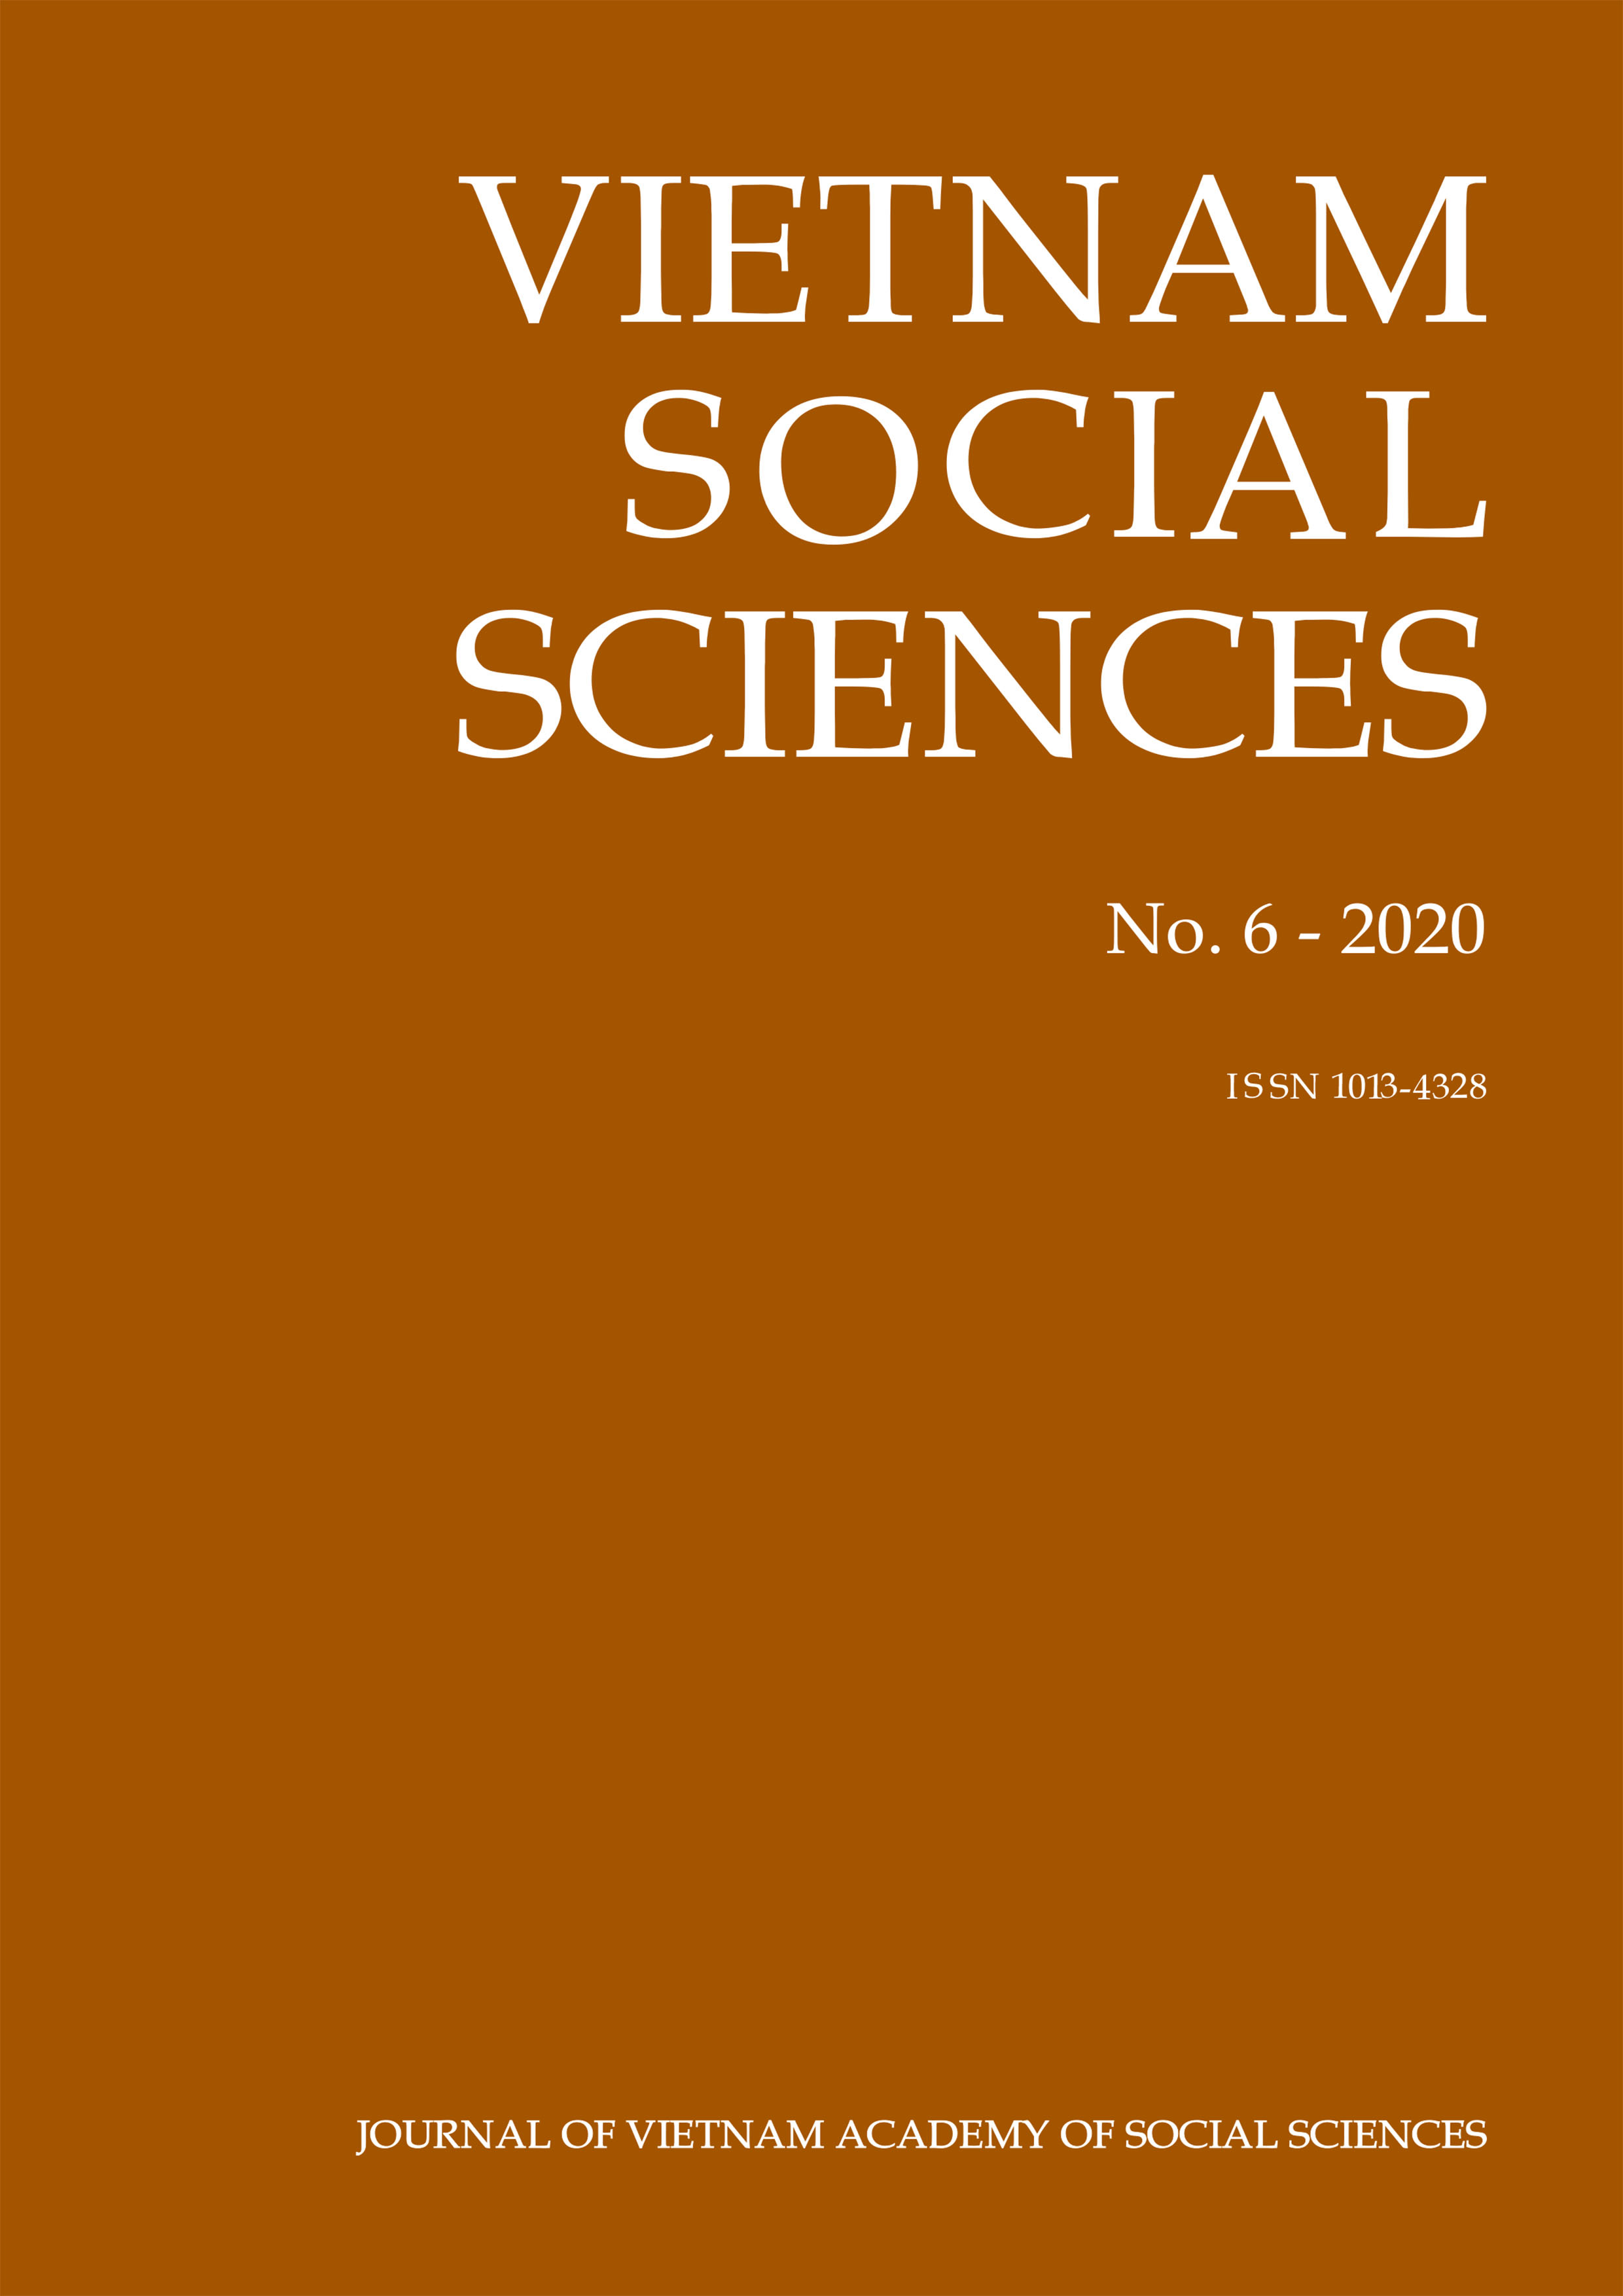 Vietnam Social Sciences. No. 6 - 2020 